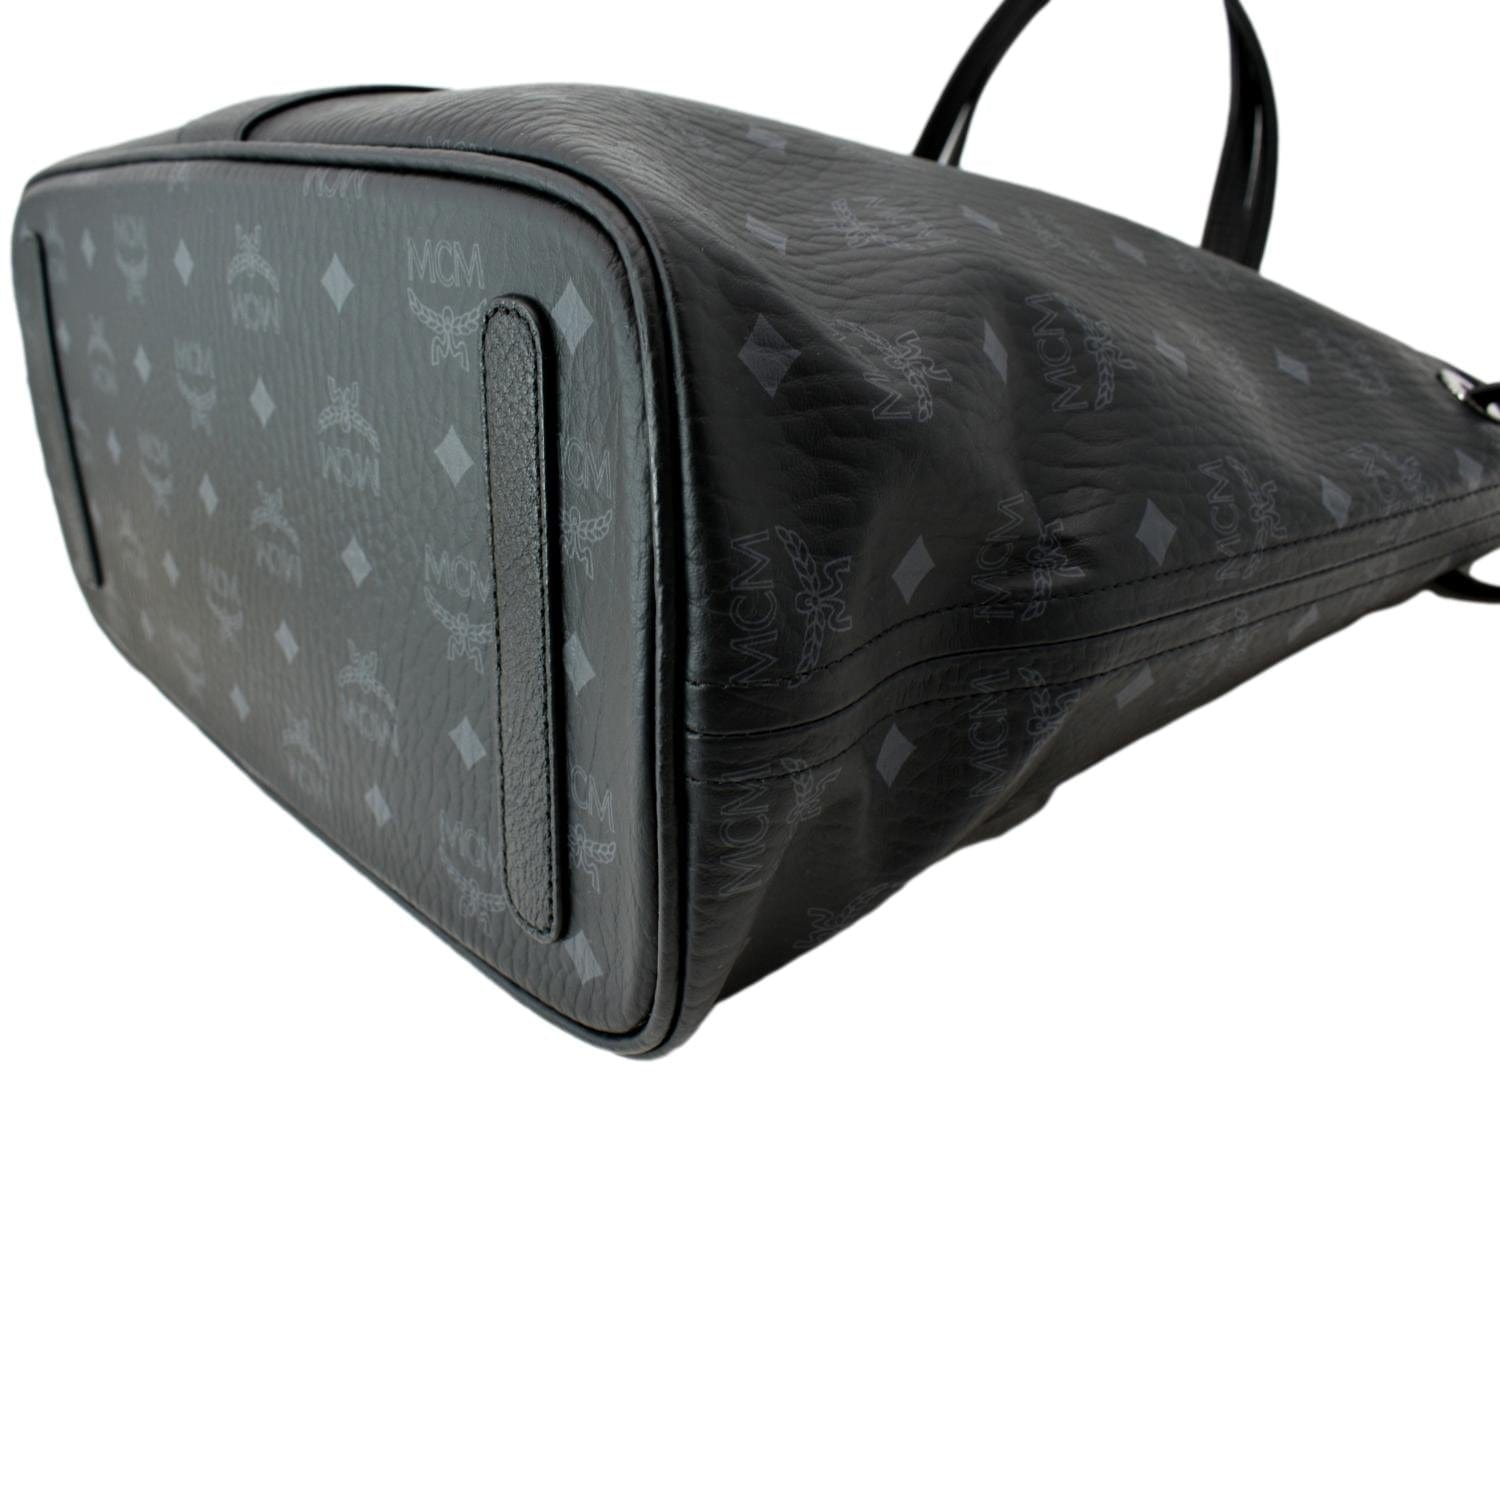 Authentic MCM Black Leather Alma style tote handbag